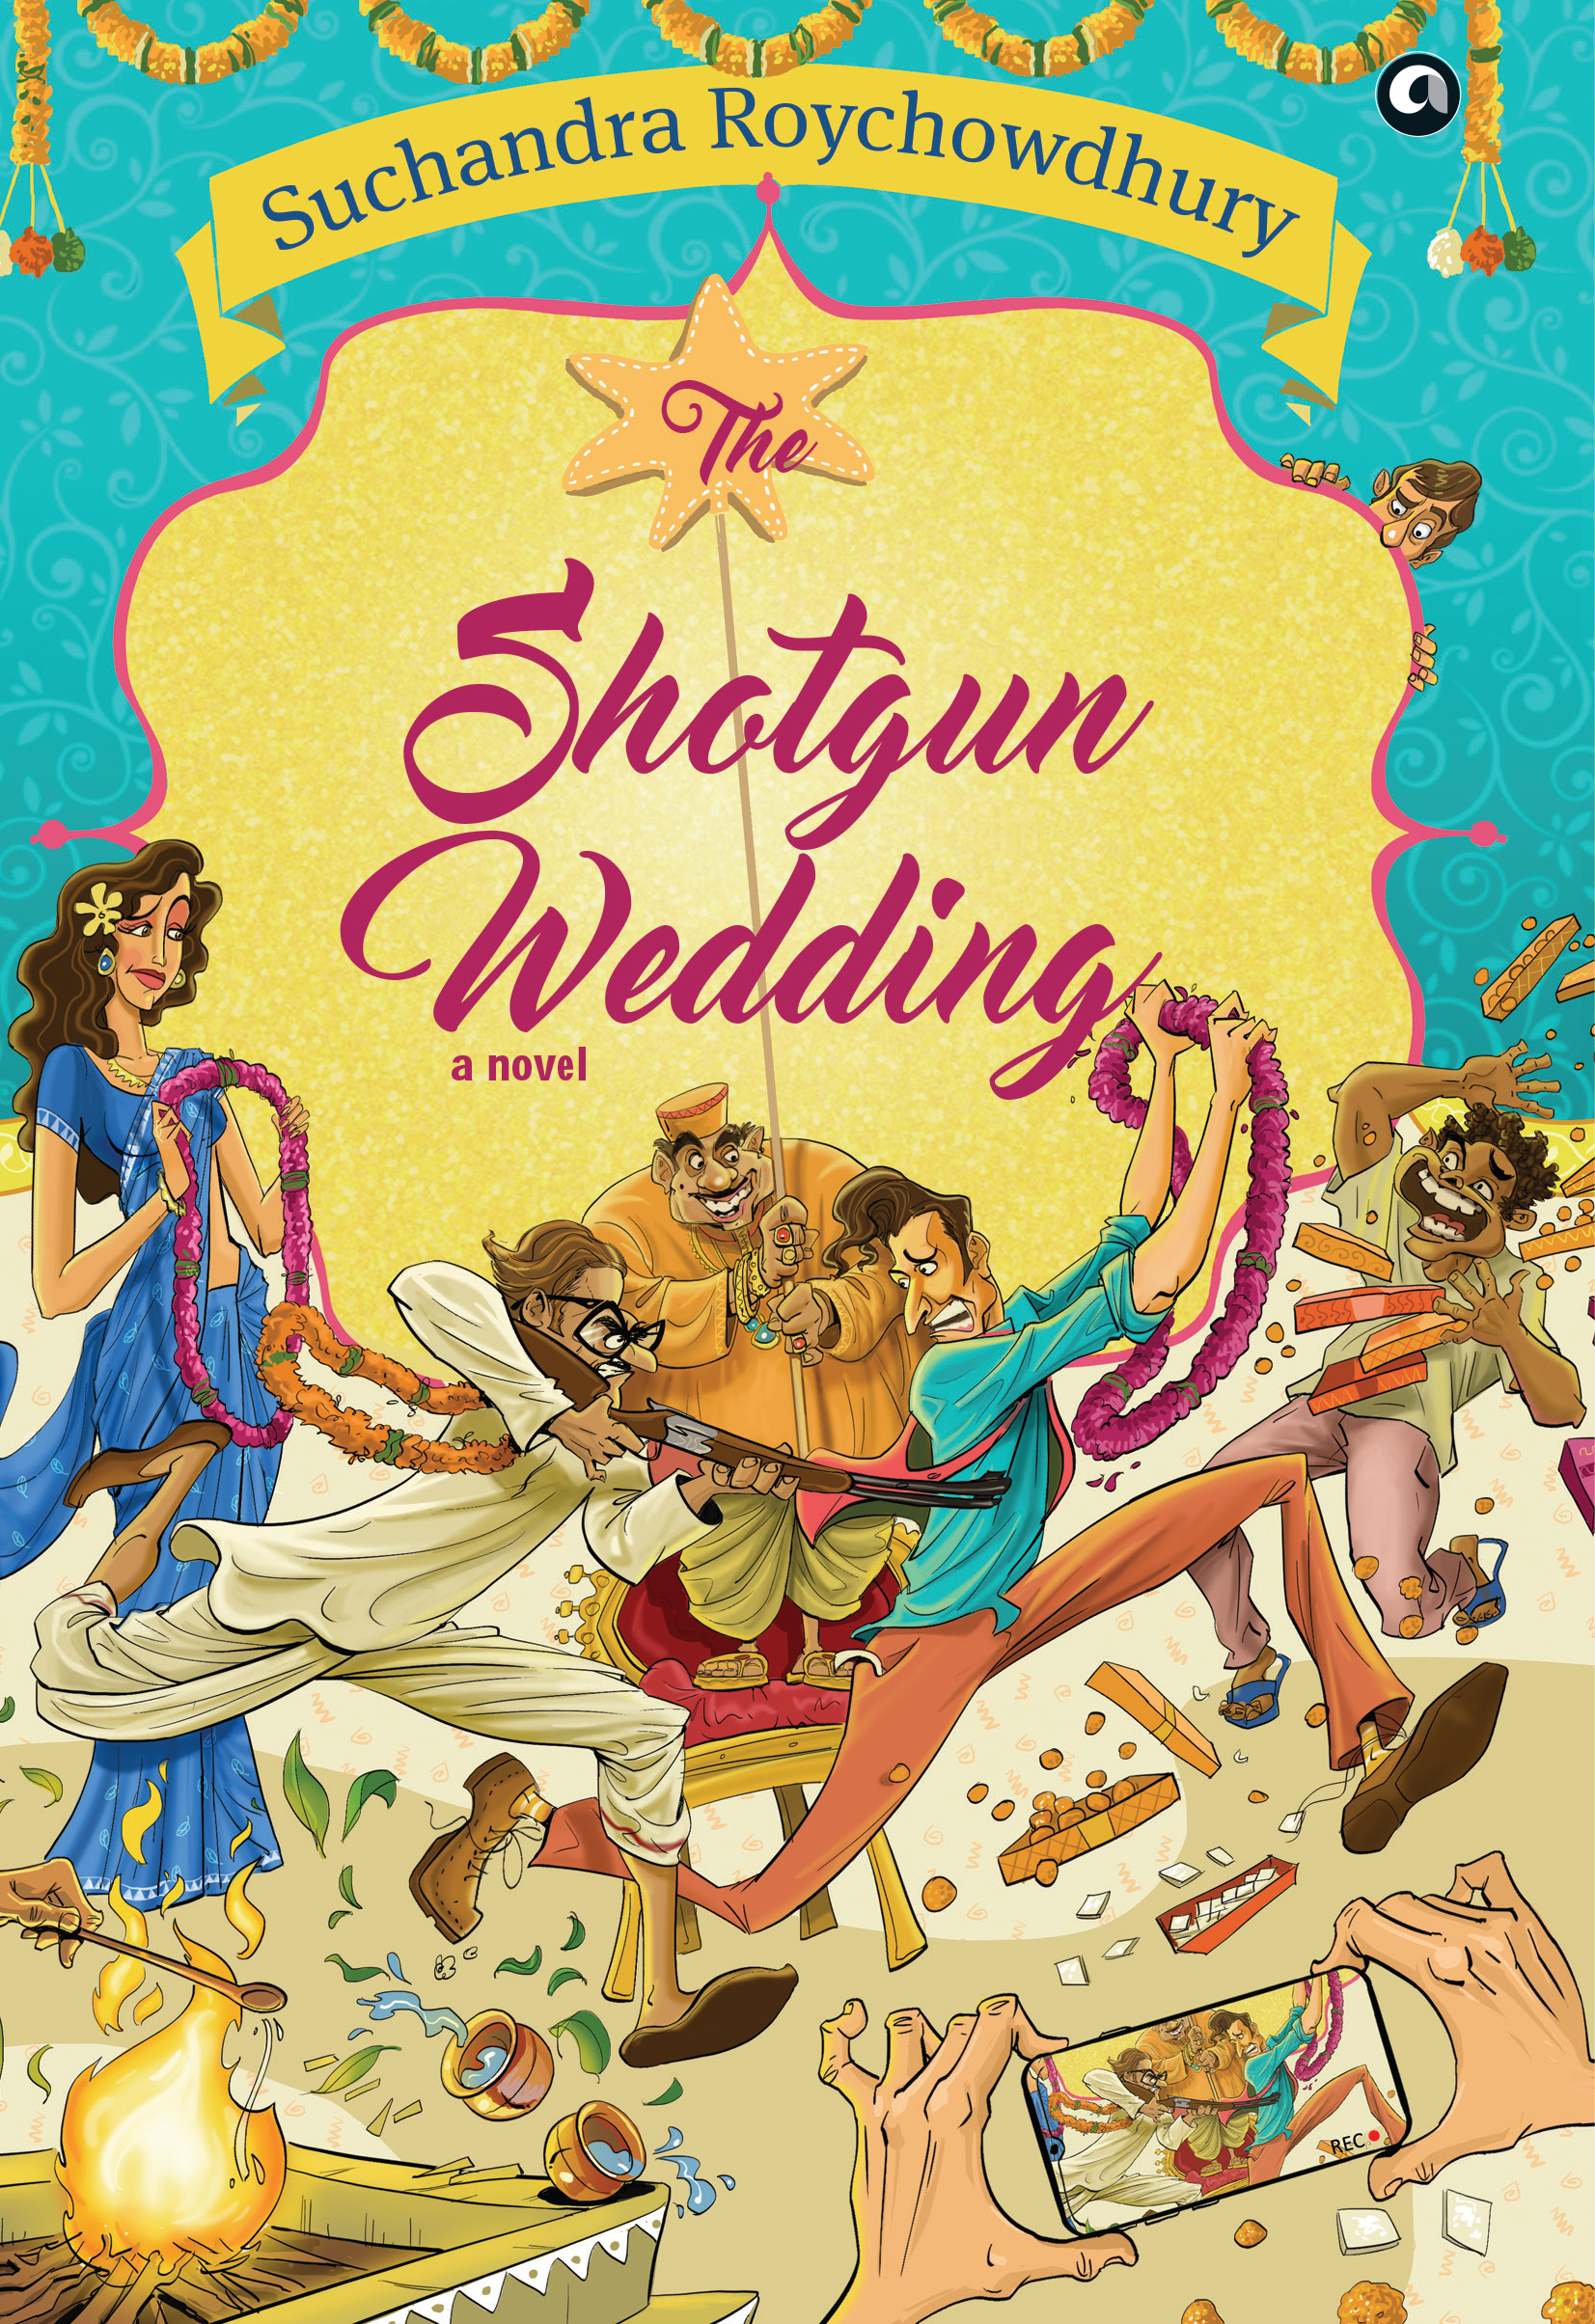 The Shotgun Wedding: A Novel